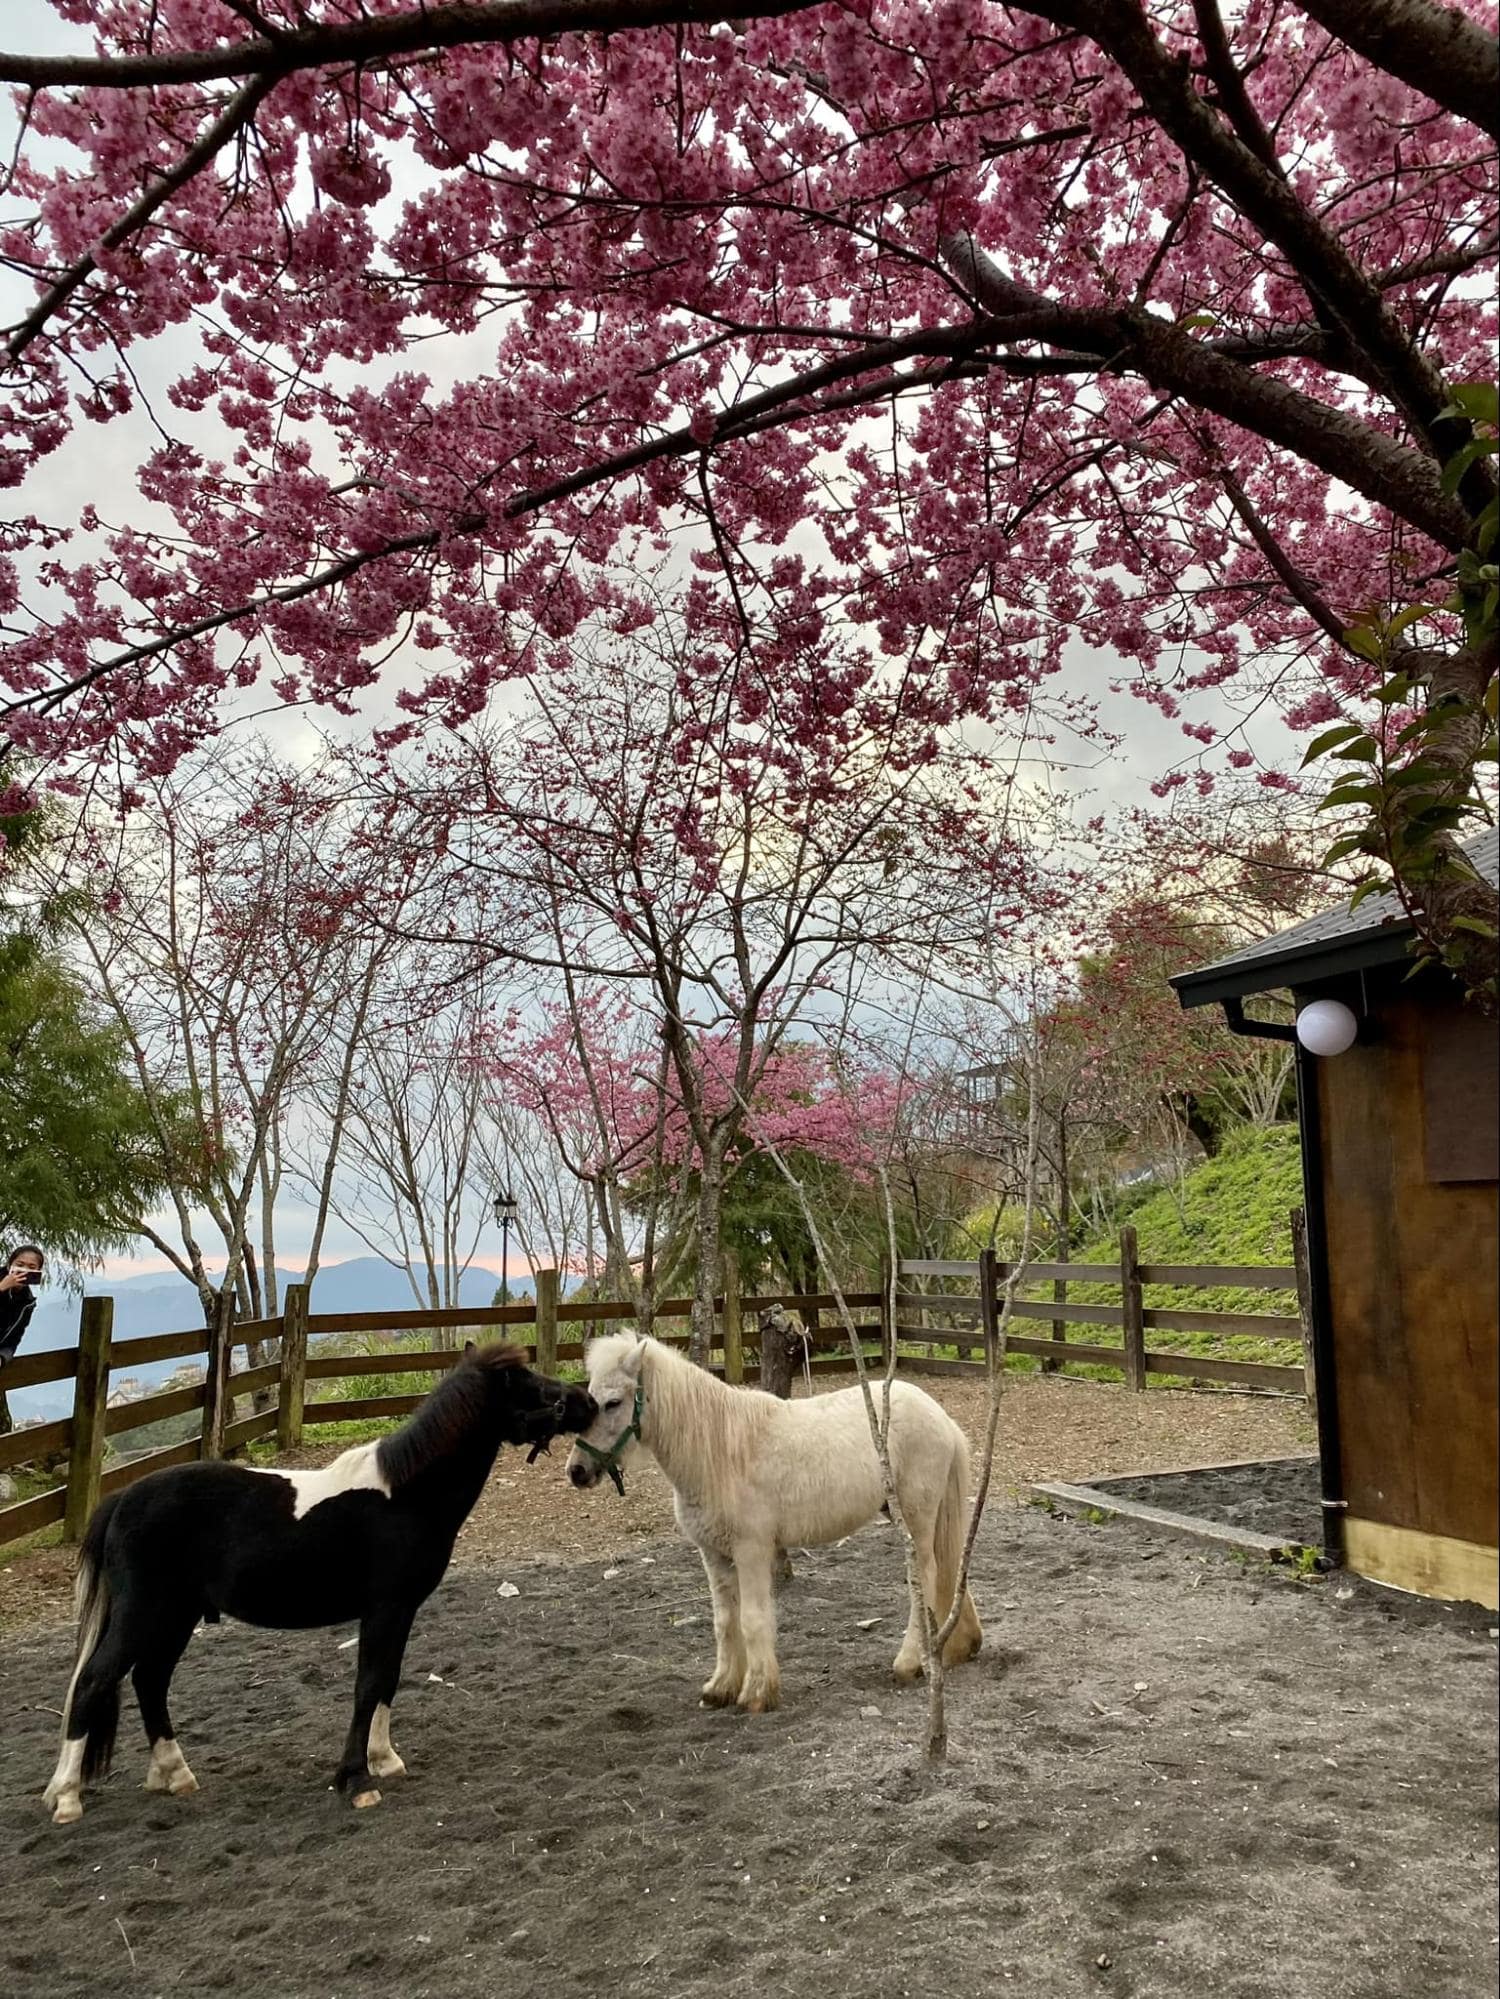 Mountain Homestays in Taiwan - EOS Resort minature horses